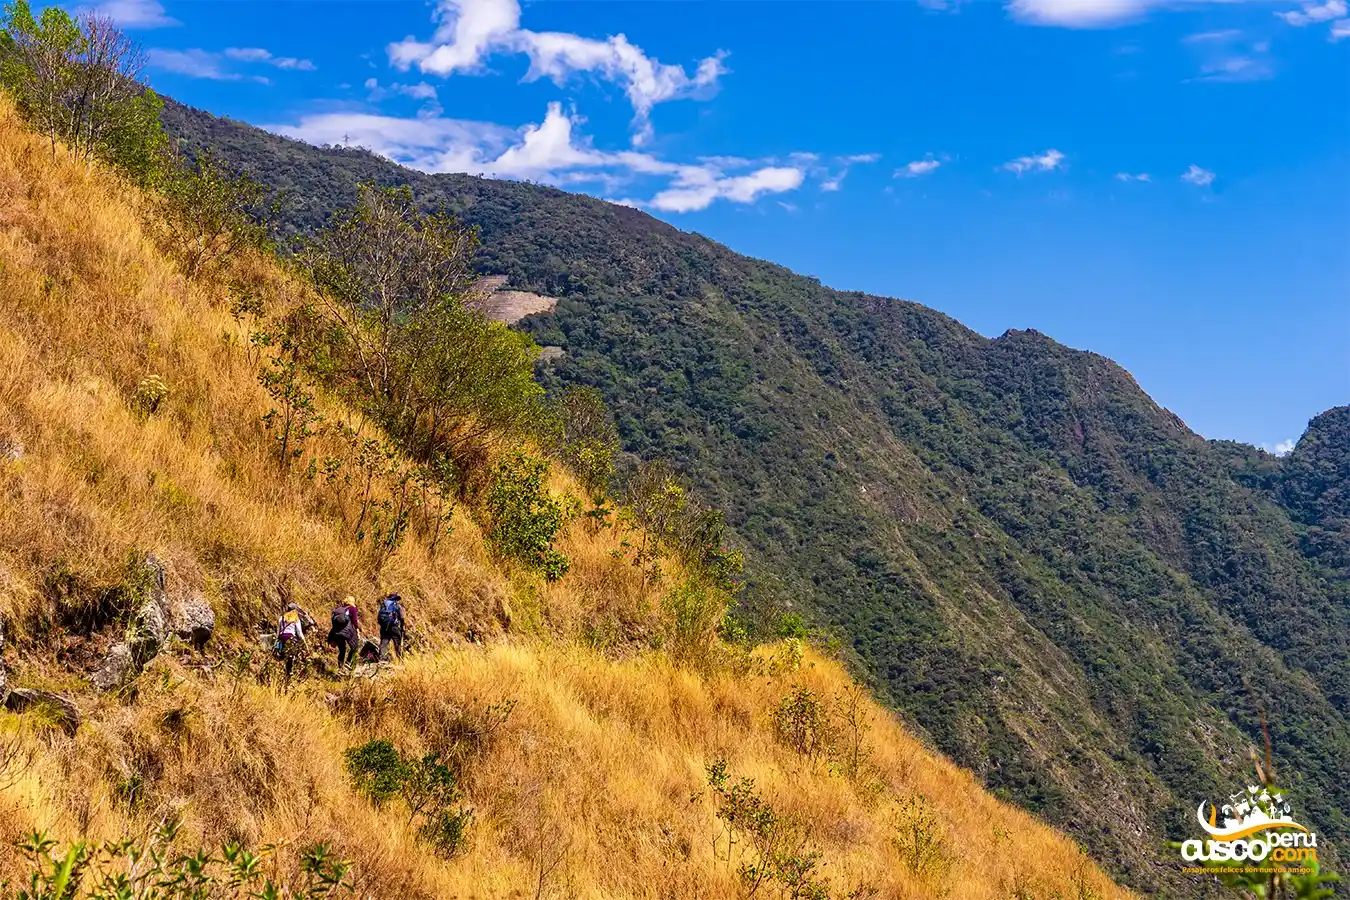 Hiking to Machu Picchu via the Inca Trail